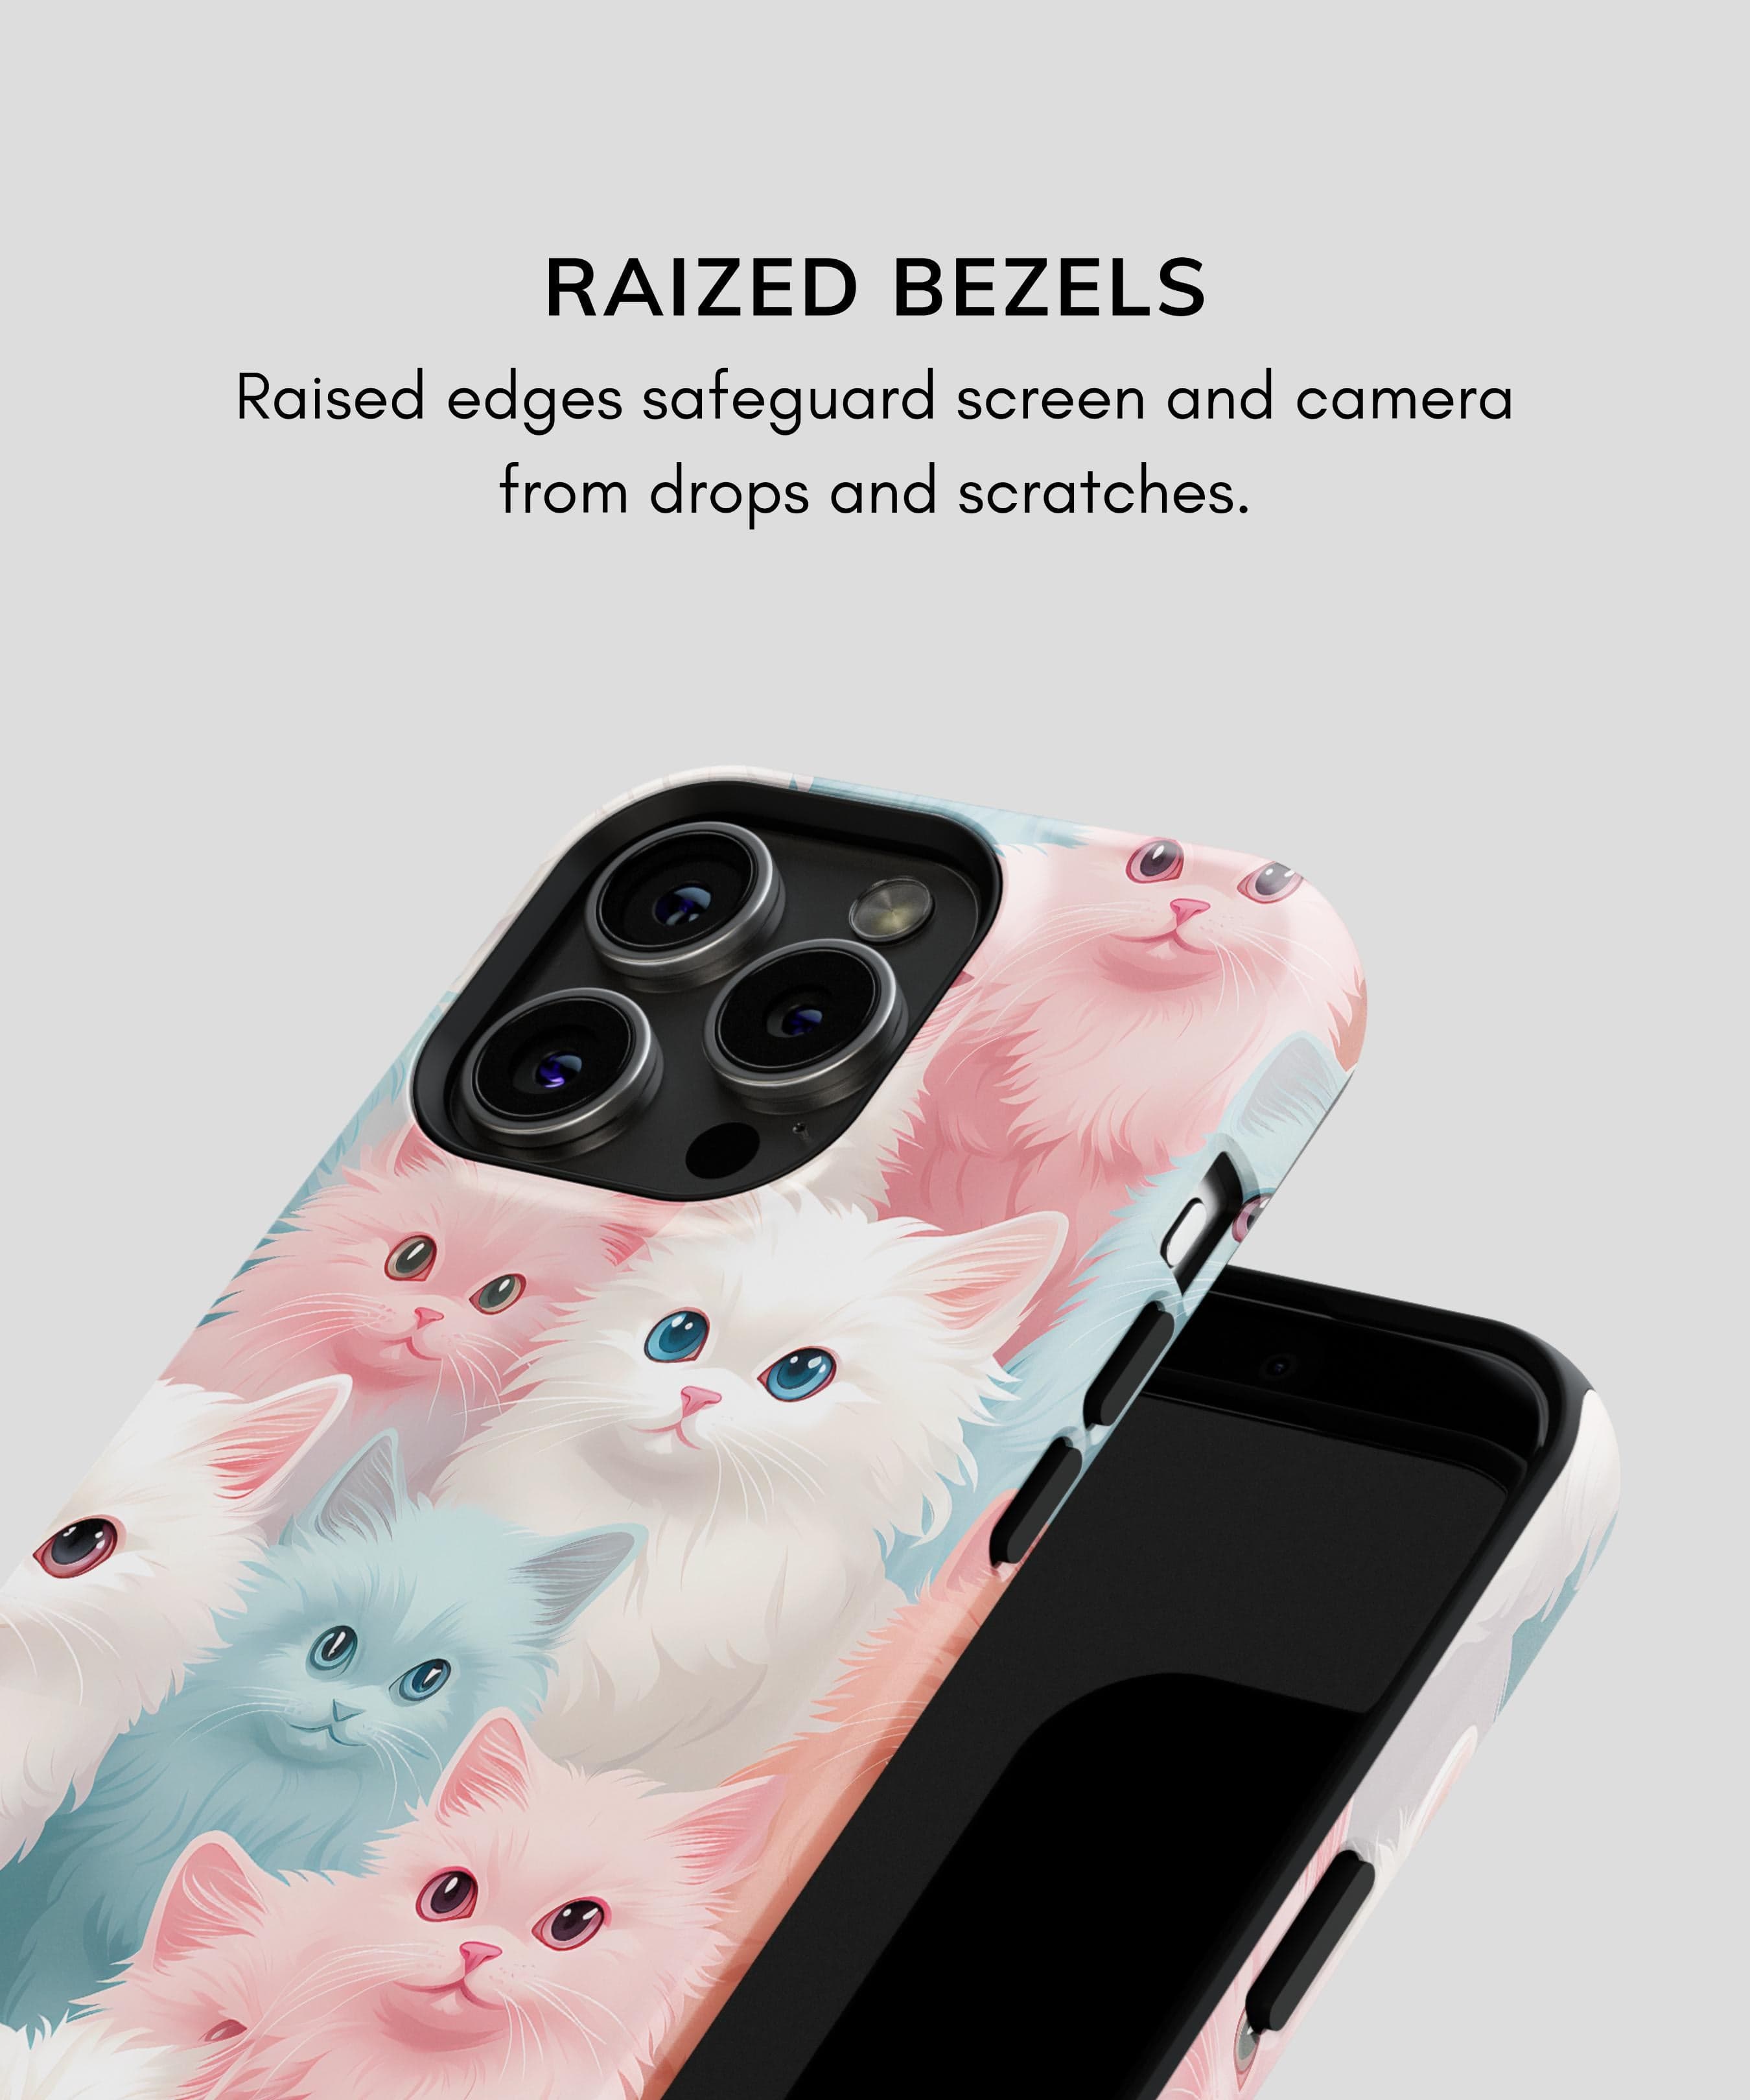 Pastel Cats iPhone Case